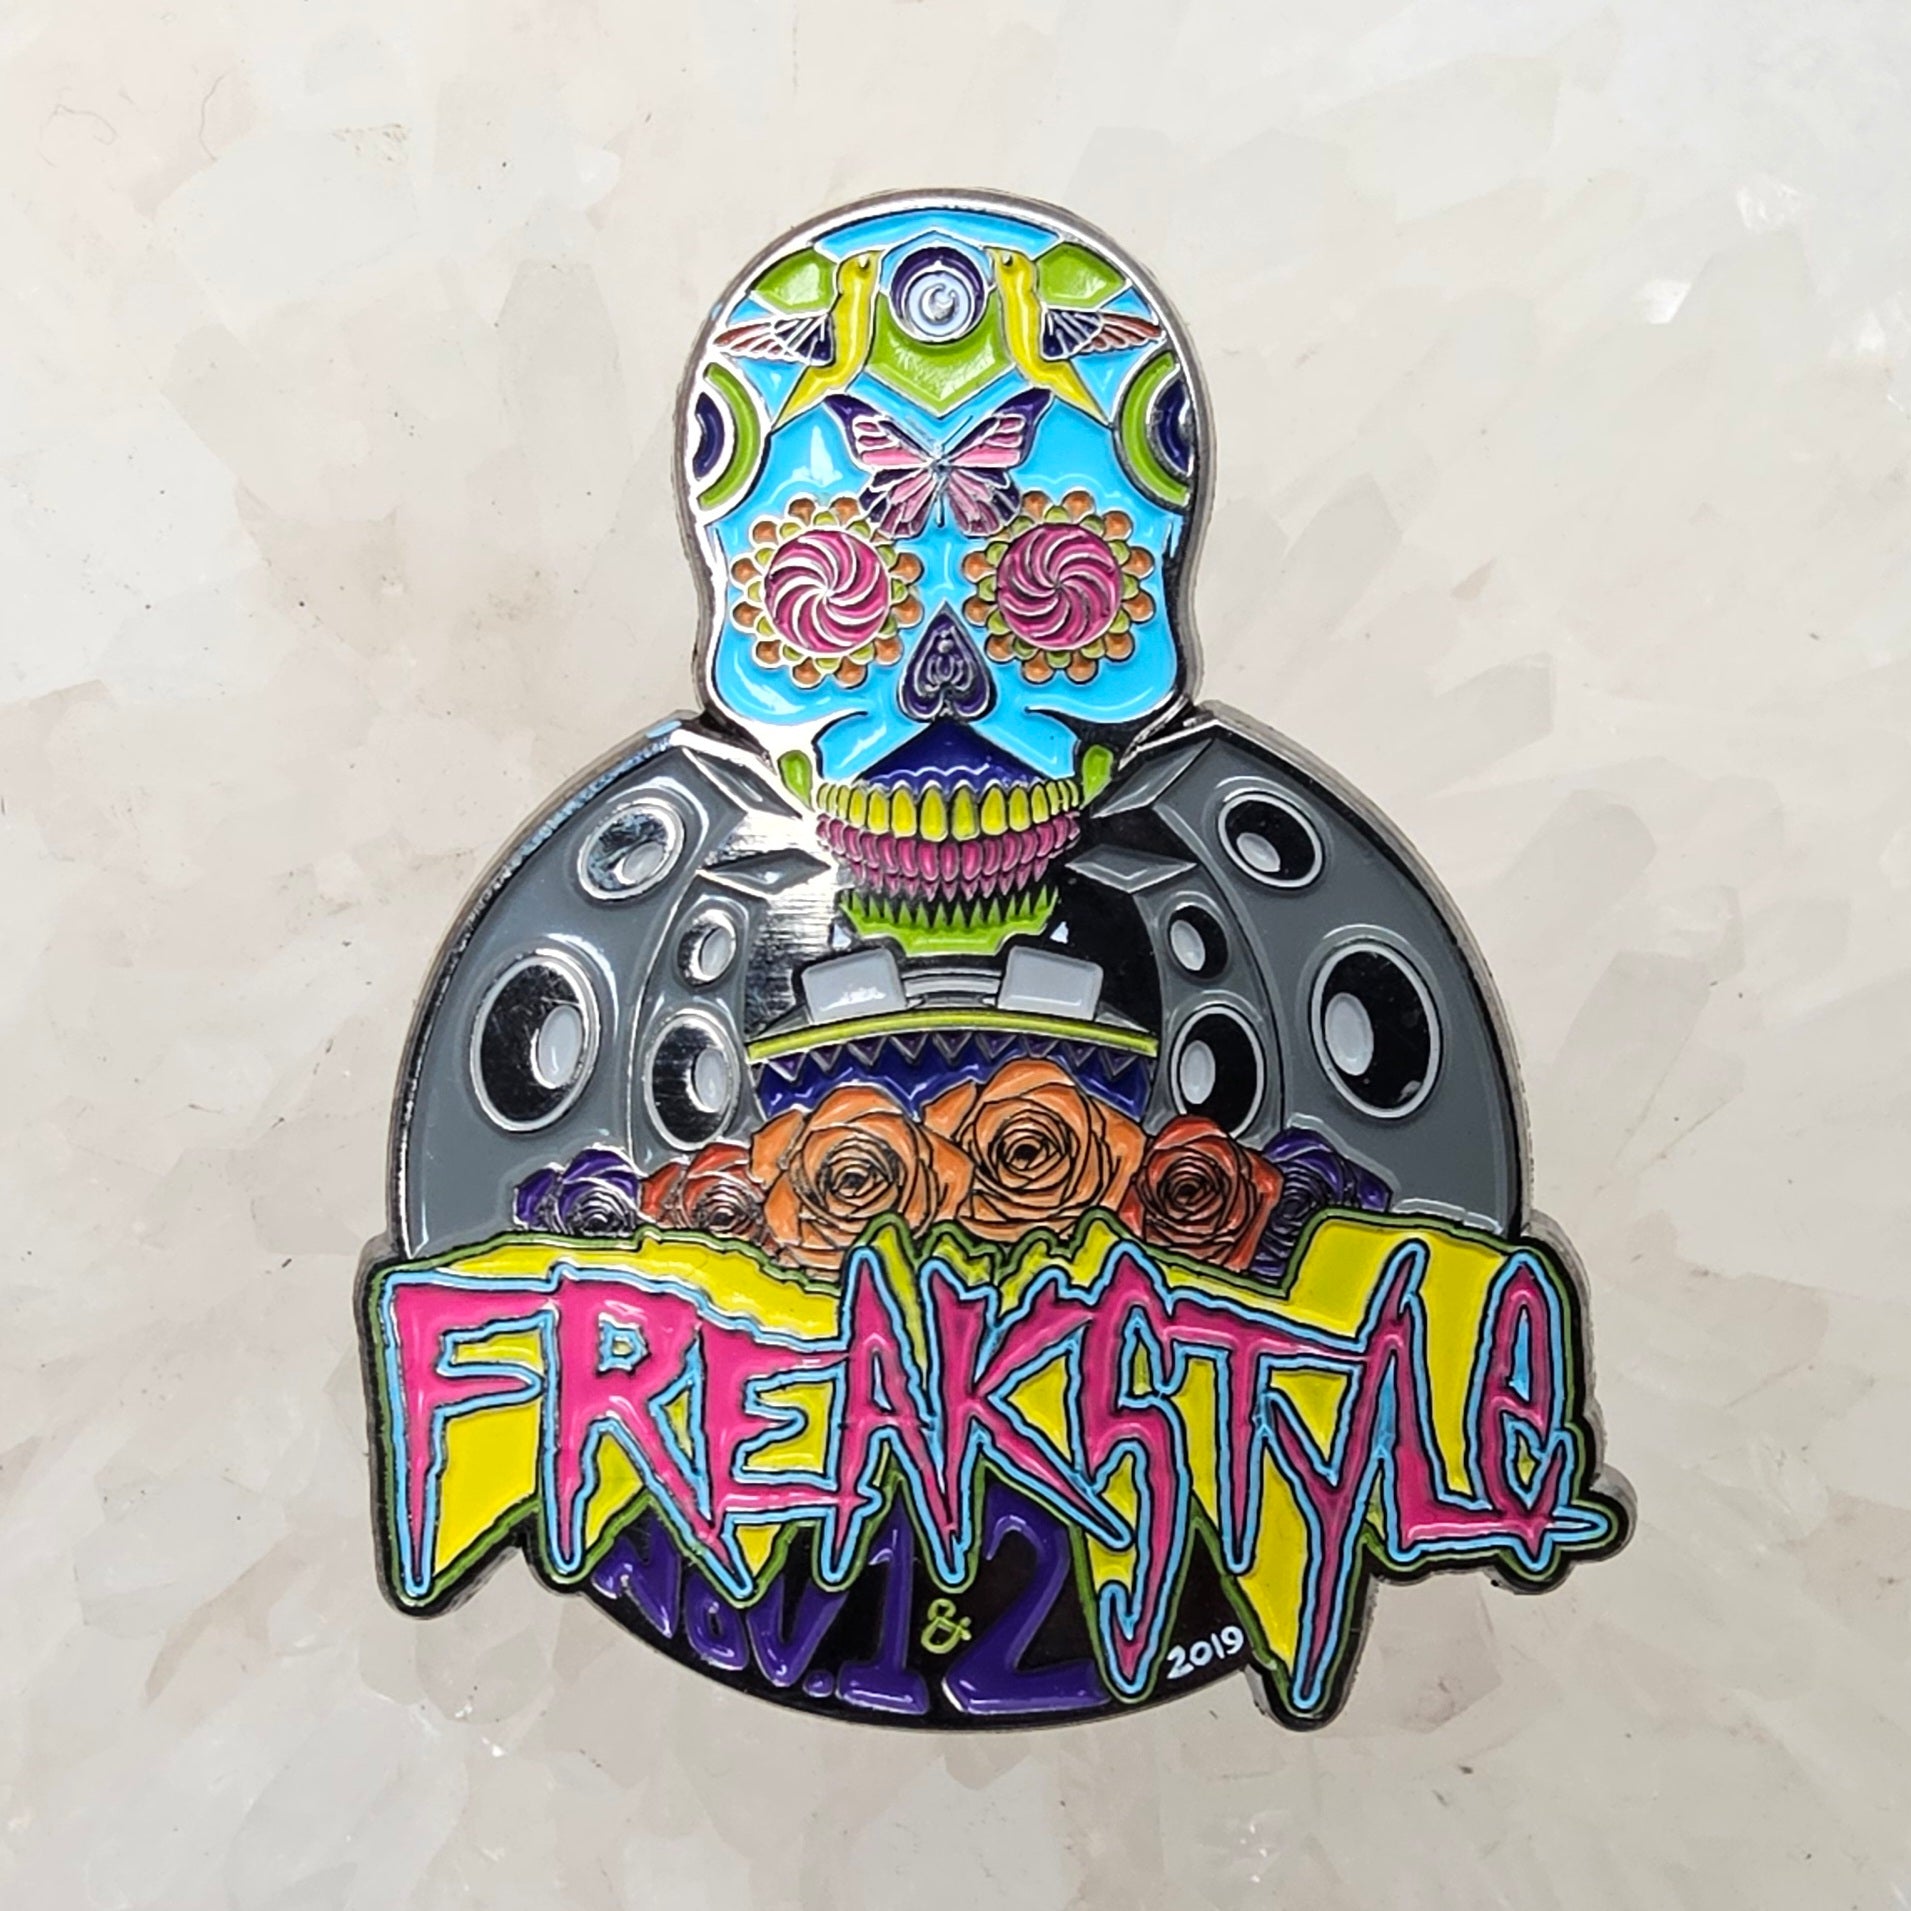 Bass Nectar Freakstyle Freak Style 2019 V2 Dubstep DJ EDM Enamel Pins Hat Pins Lapel Pin Brooch Badge Festival Pin